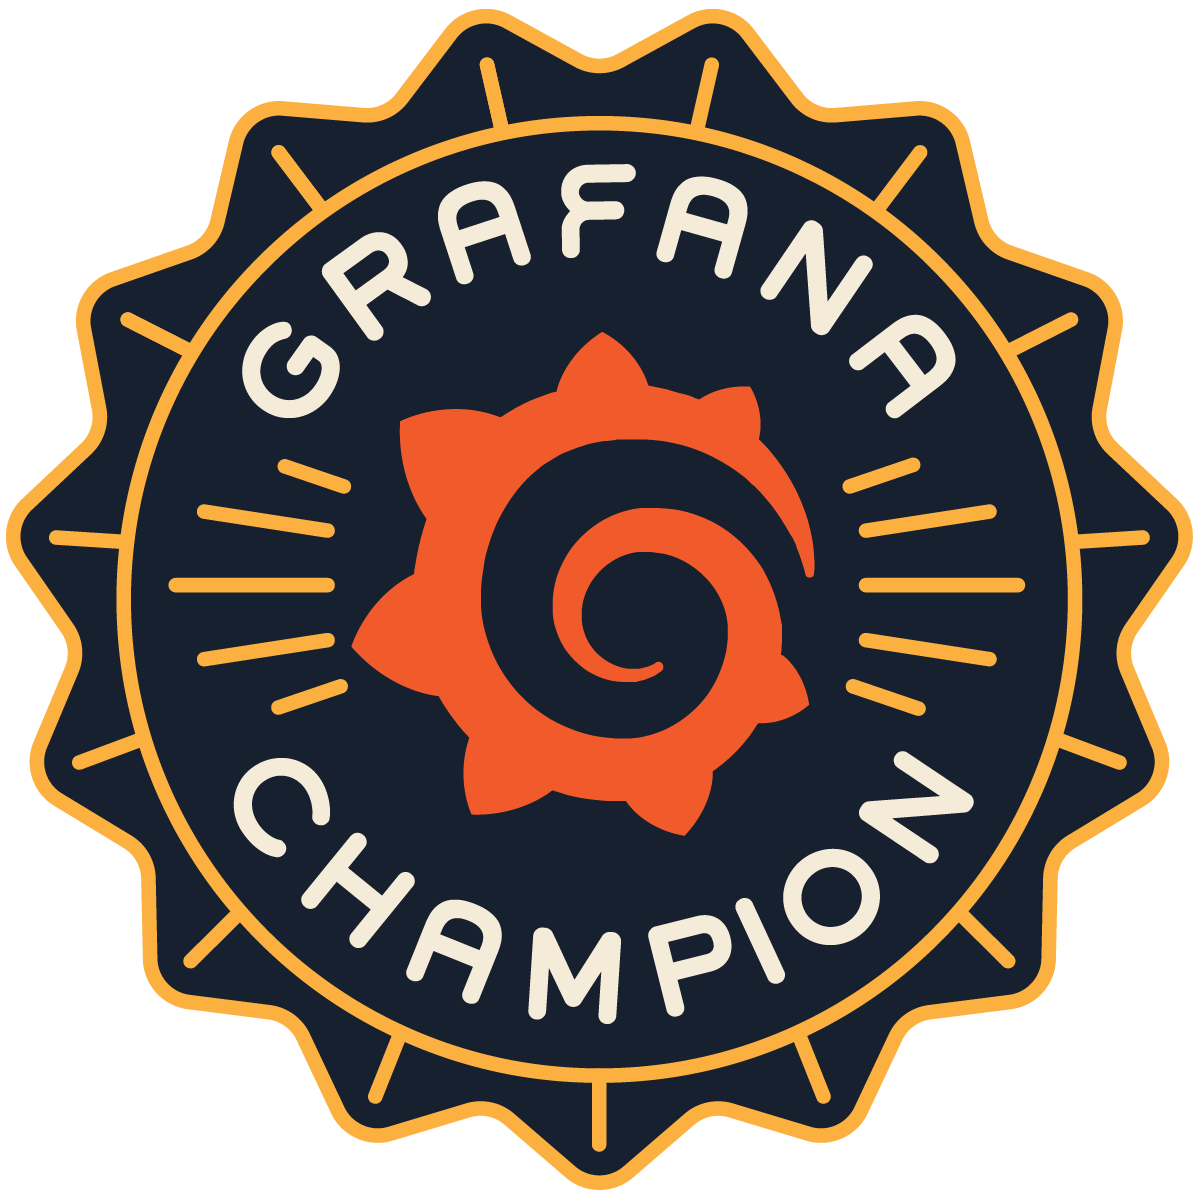 Grafana Champions information